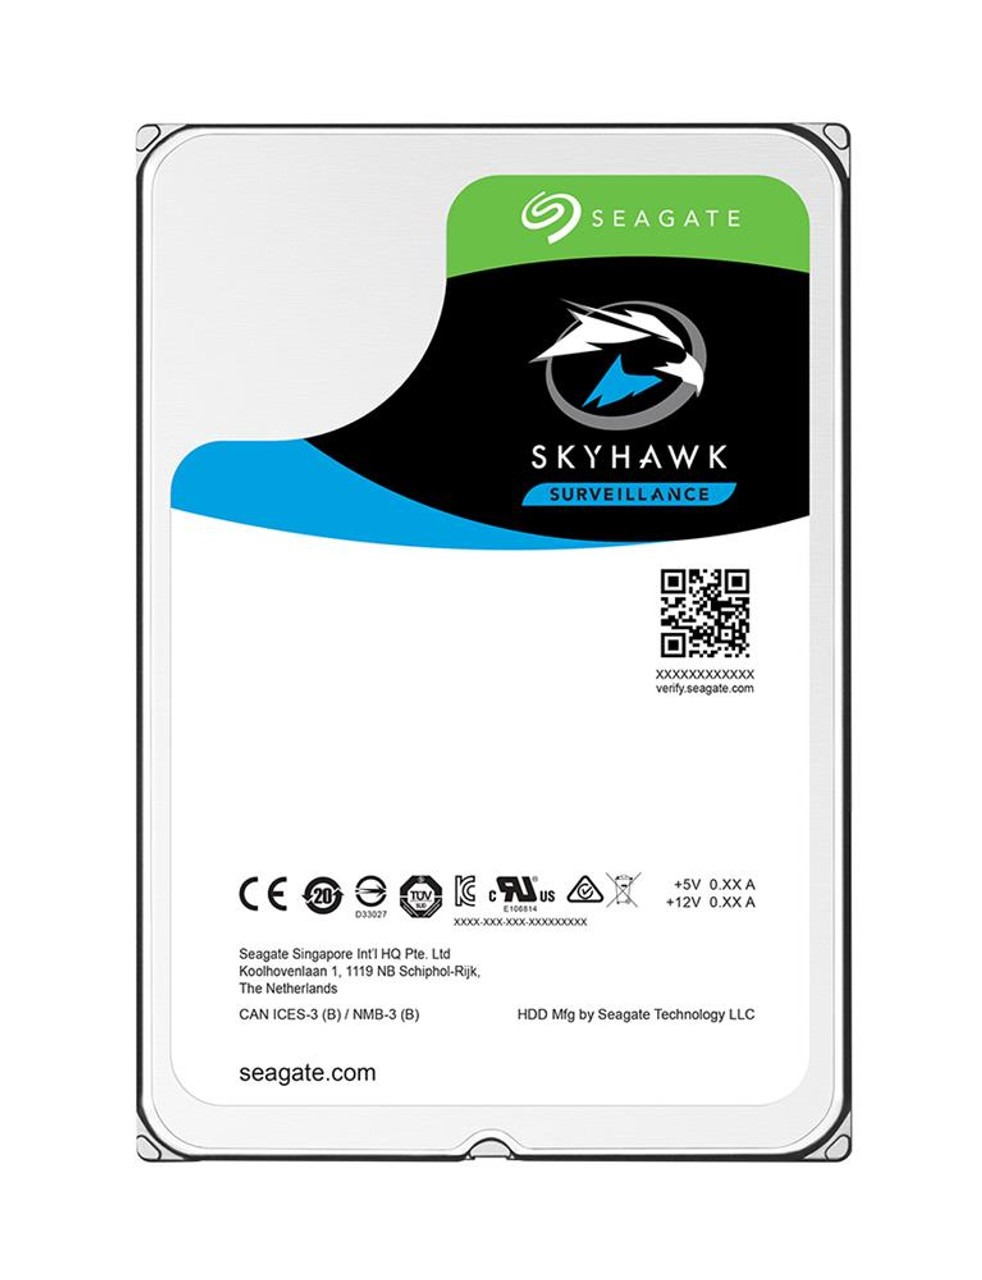 ST10000VXB004 Seagate SkyHawk 10TB 7200RPM SATA 6Gbps 256MB Cache (512e) 3.5-inch Internal Hard Drive